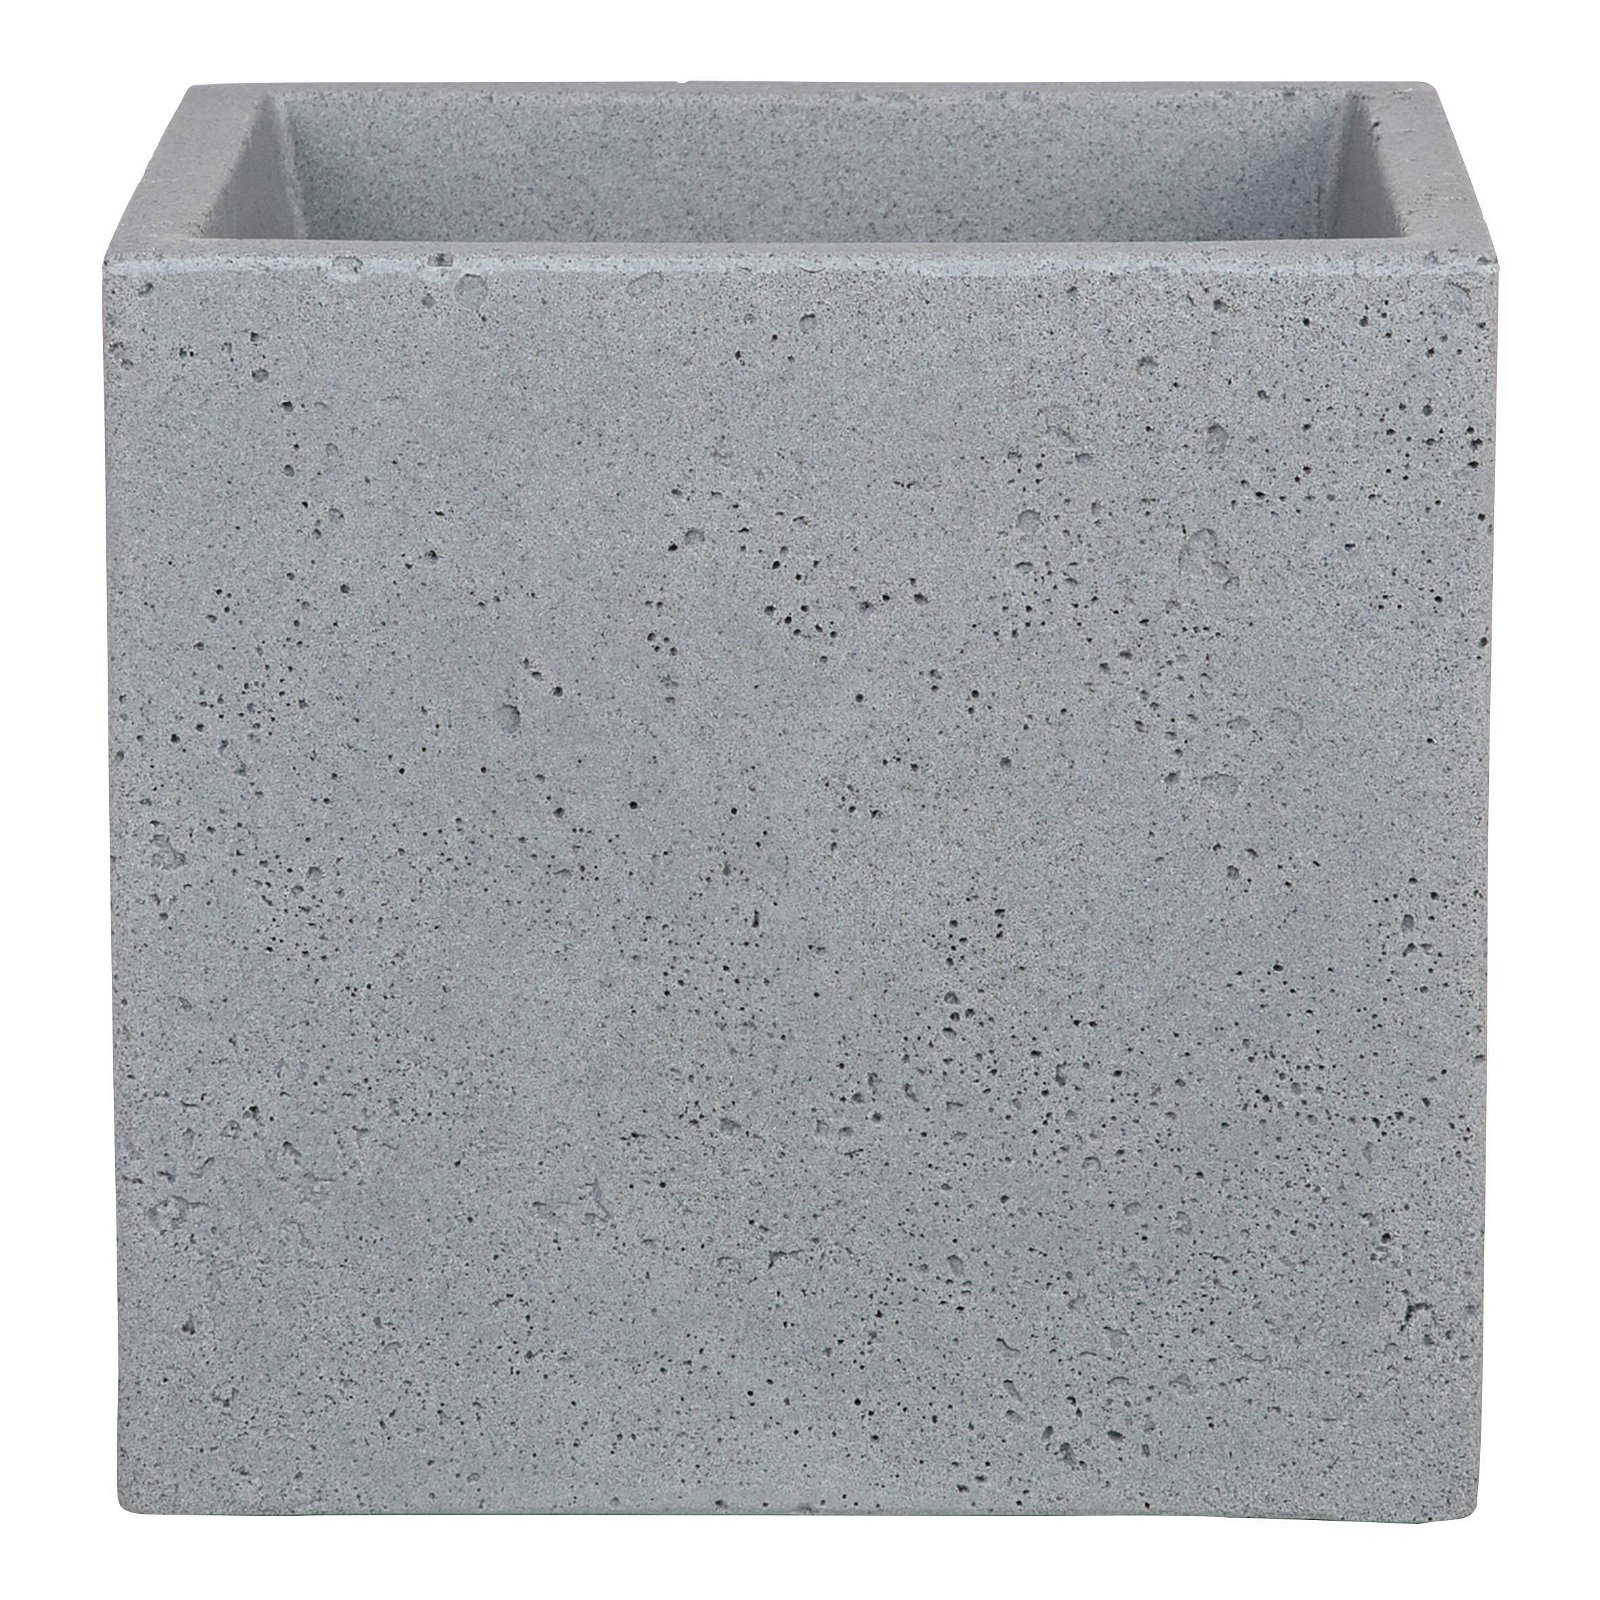 Pflanzkübel 'C-Cube', Stony Grey, 29 x 29 x H 27 cm, 18 Liter